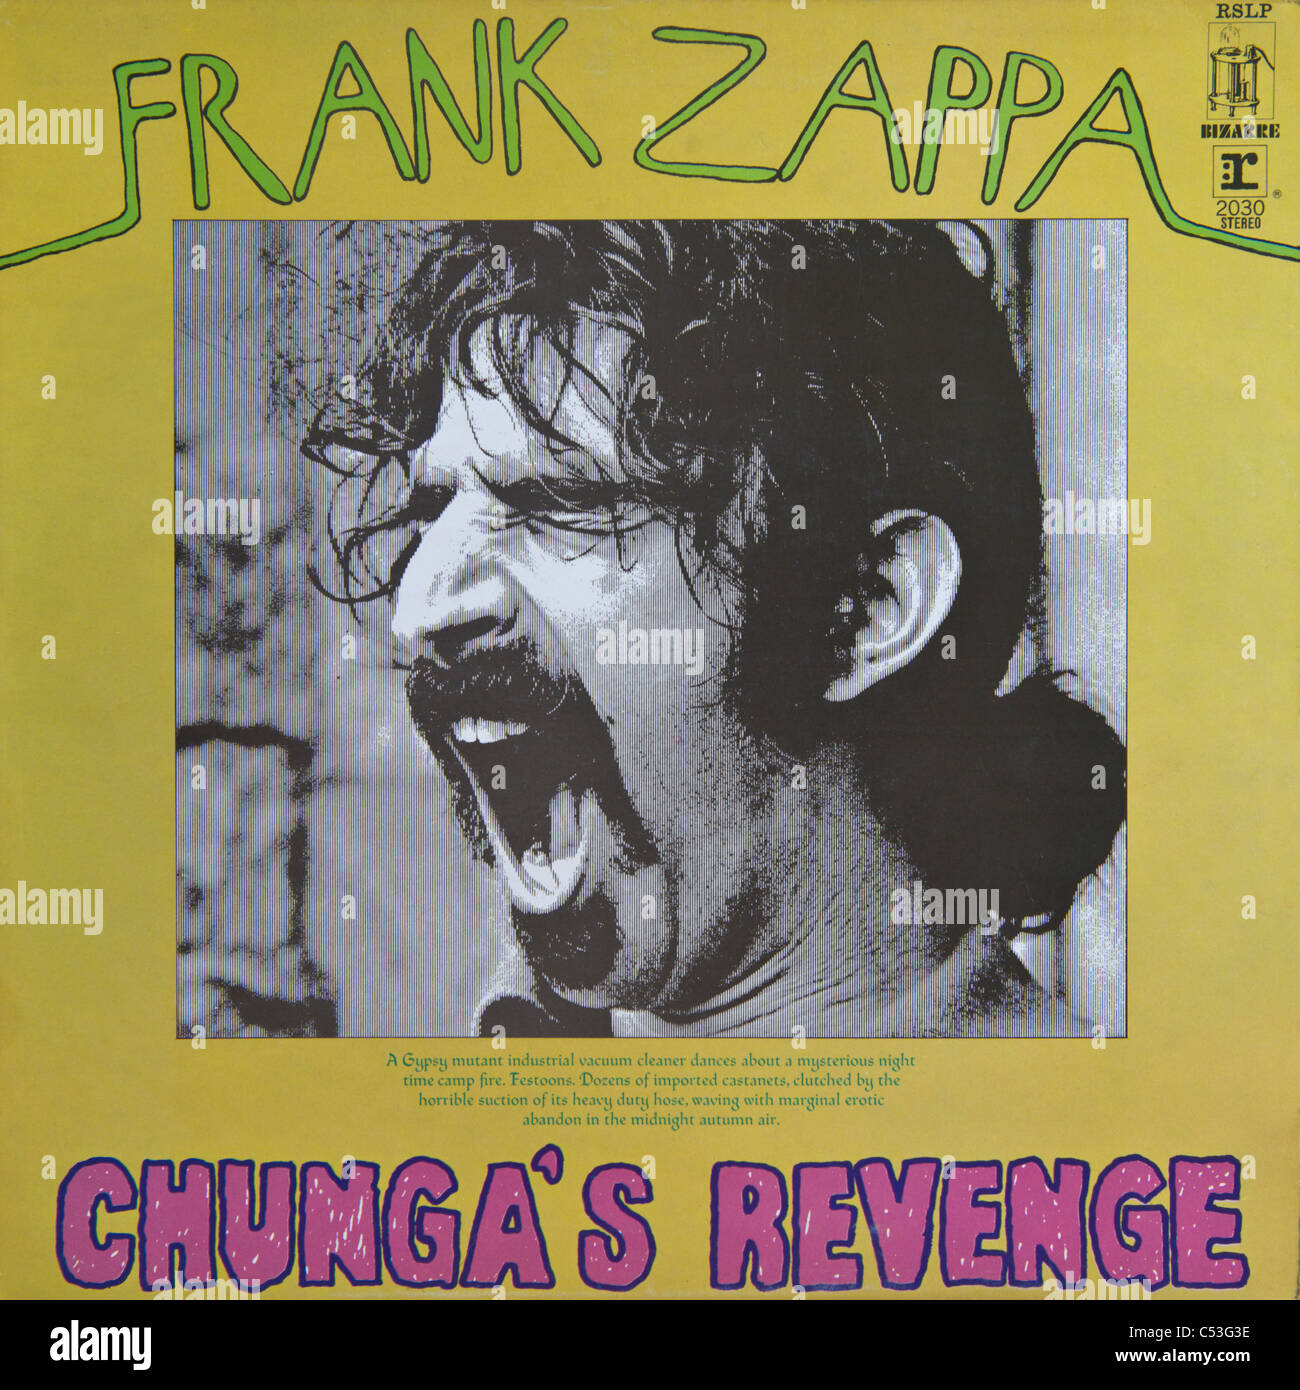 Cover of original vinyl album Chunga's Revenge by Frank Zappa released 1970 on Reprise Records Stock Photo